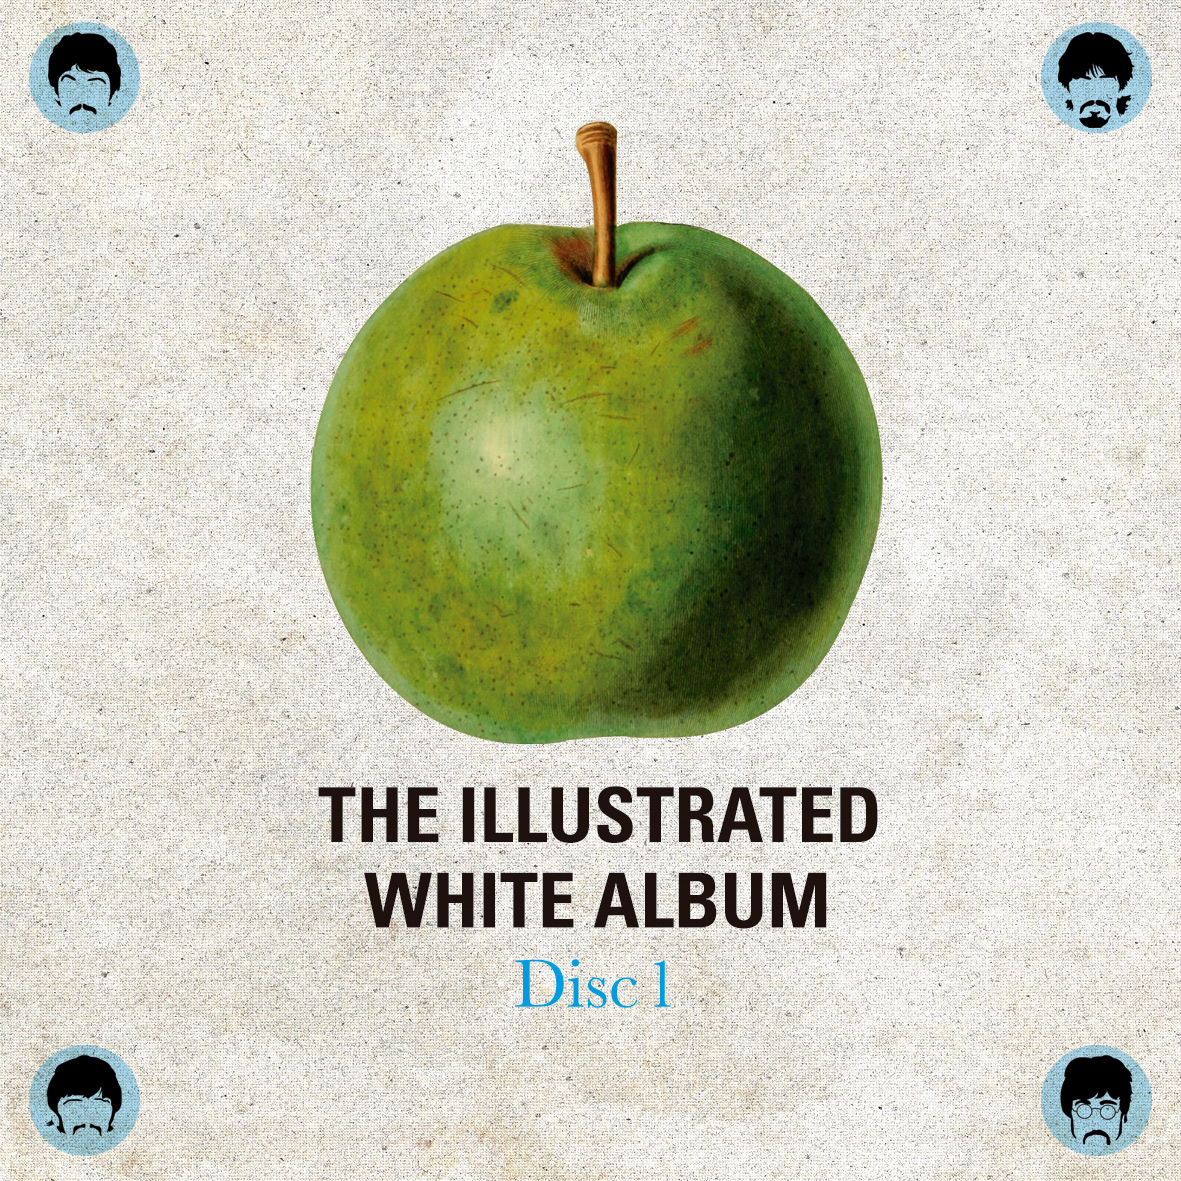 collage the beatles white album 60's Digital Collage series sistema John Lennon Paul McCartney George harrison ringo starr rock vintage Retro ilustracion